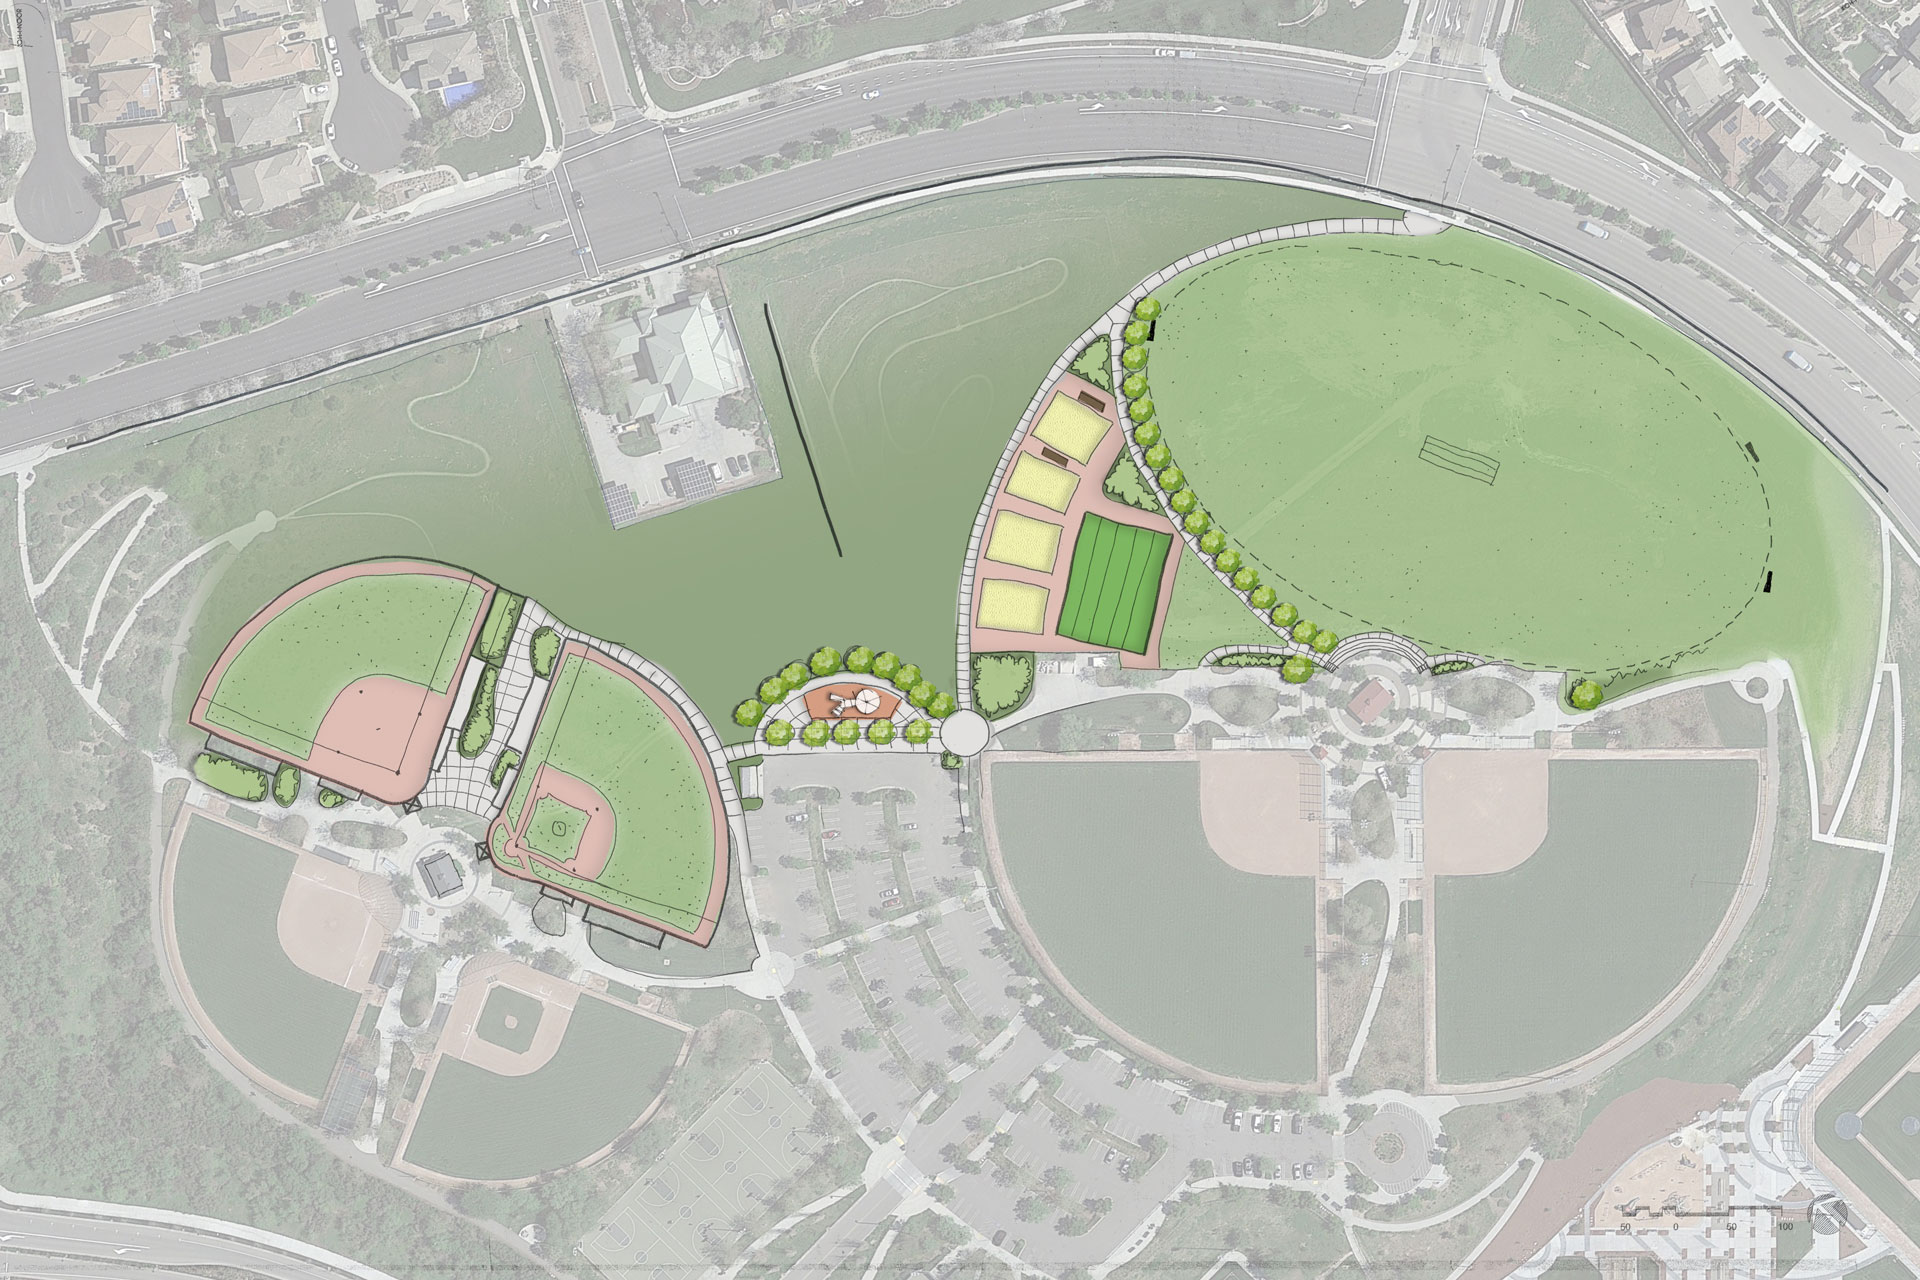 Fallon Sports Park Site Plan Rendering